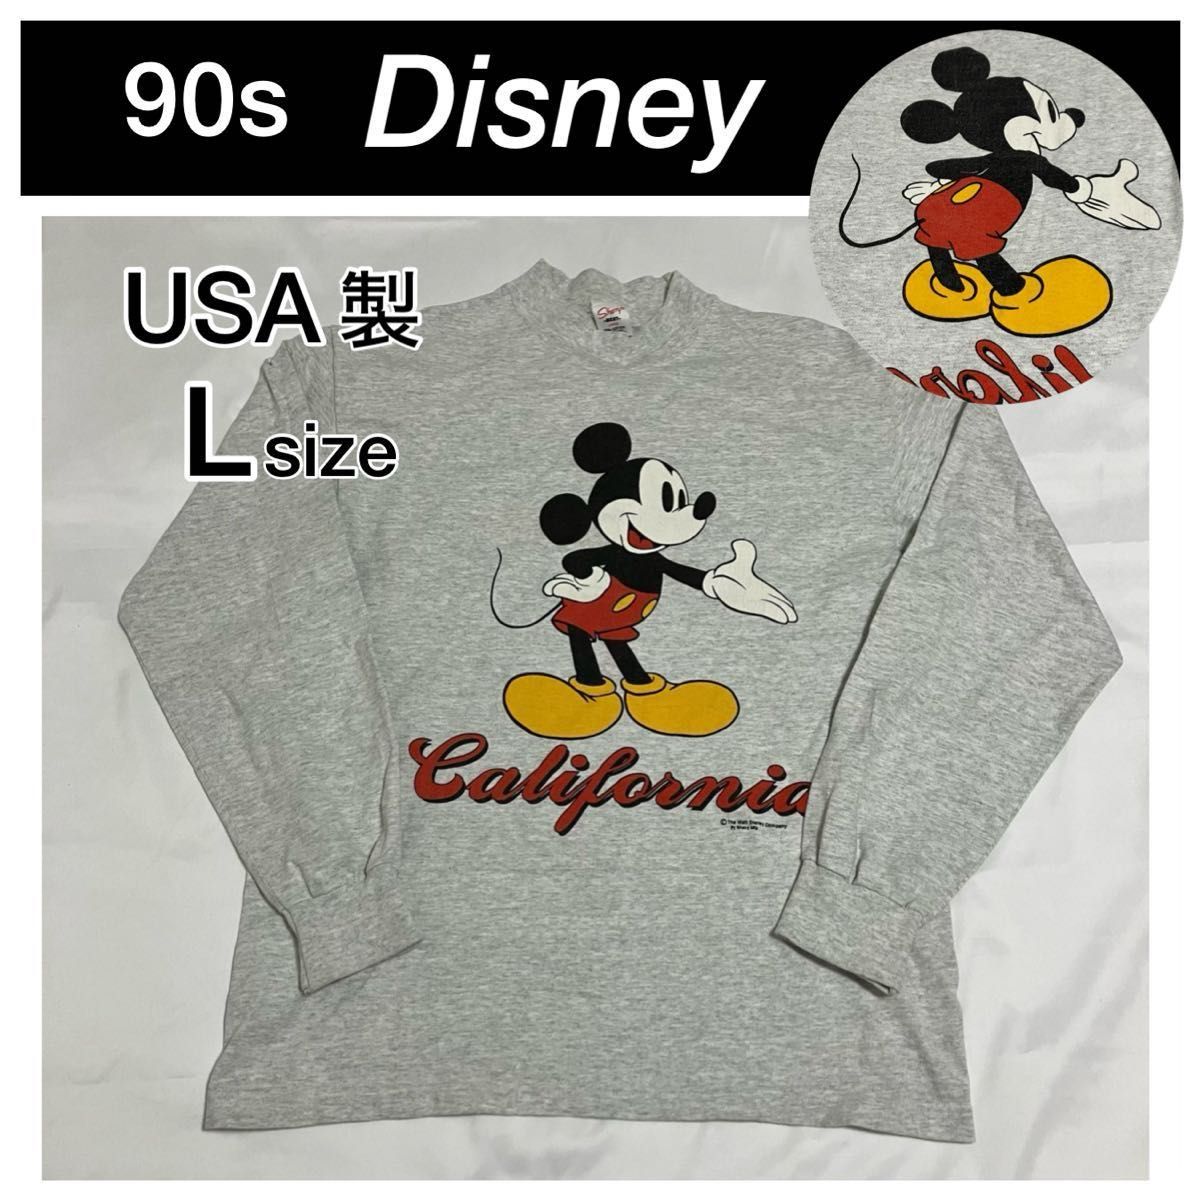 USA製 90s ミッキーマウス 両面プリント ロングTシャツ Lサイズ グレー モックネック ディズニー vintage